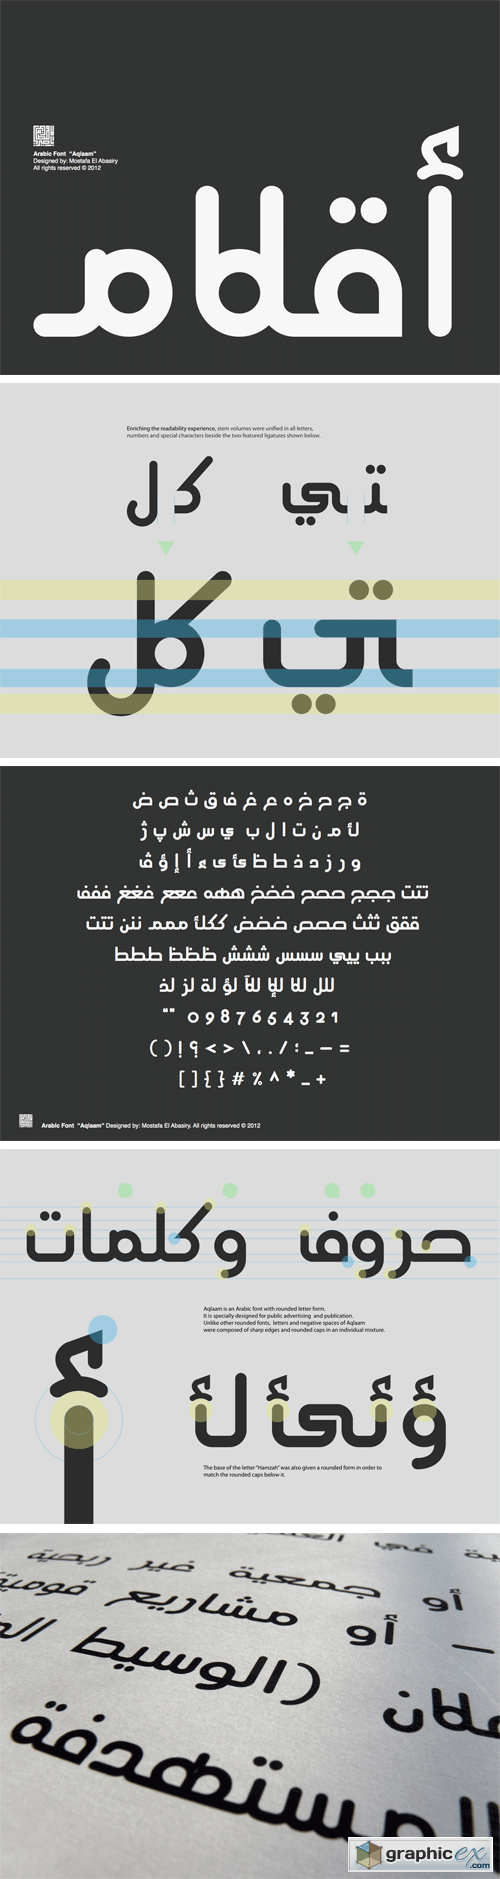 Aqlaam Arabic Font for $20